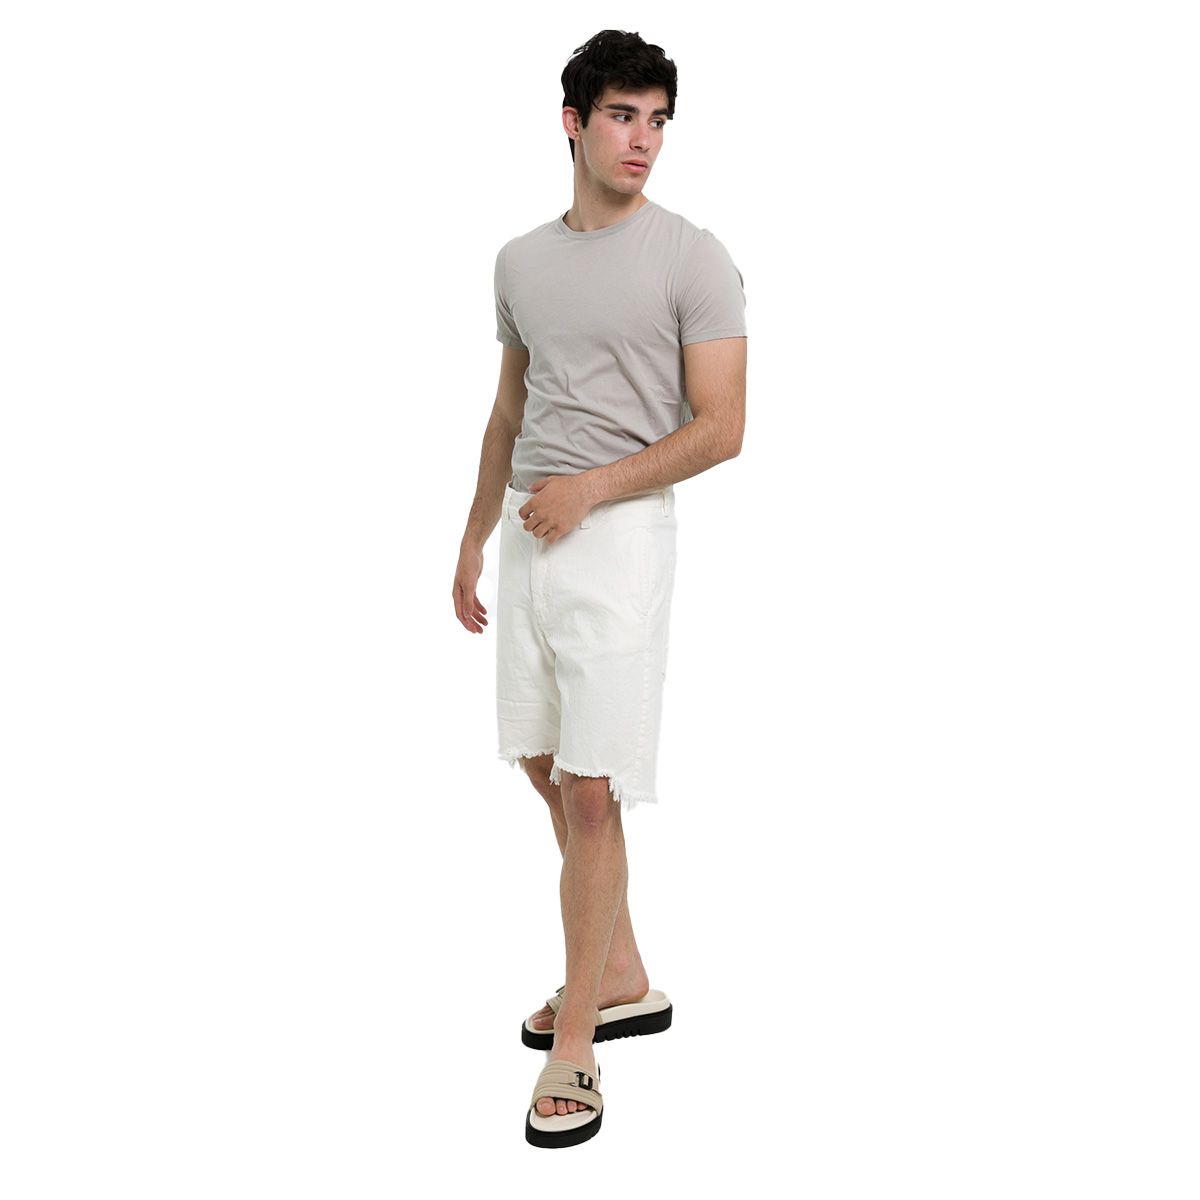 Den Fidias Destressed Shorts/White